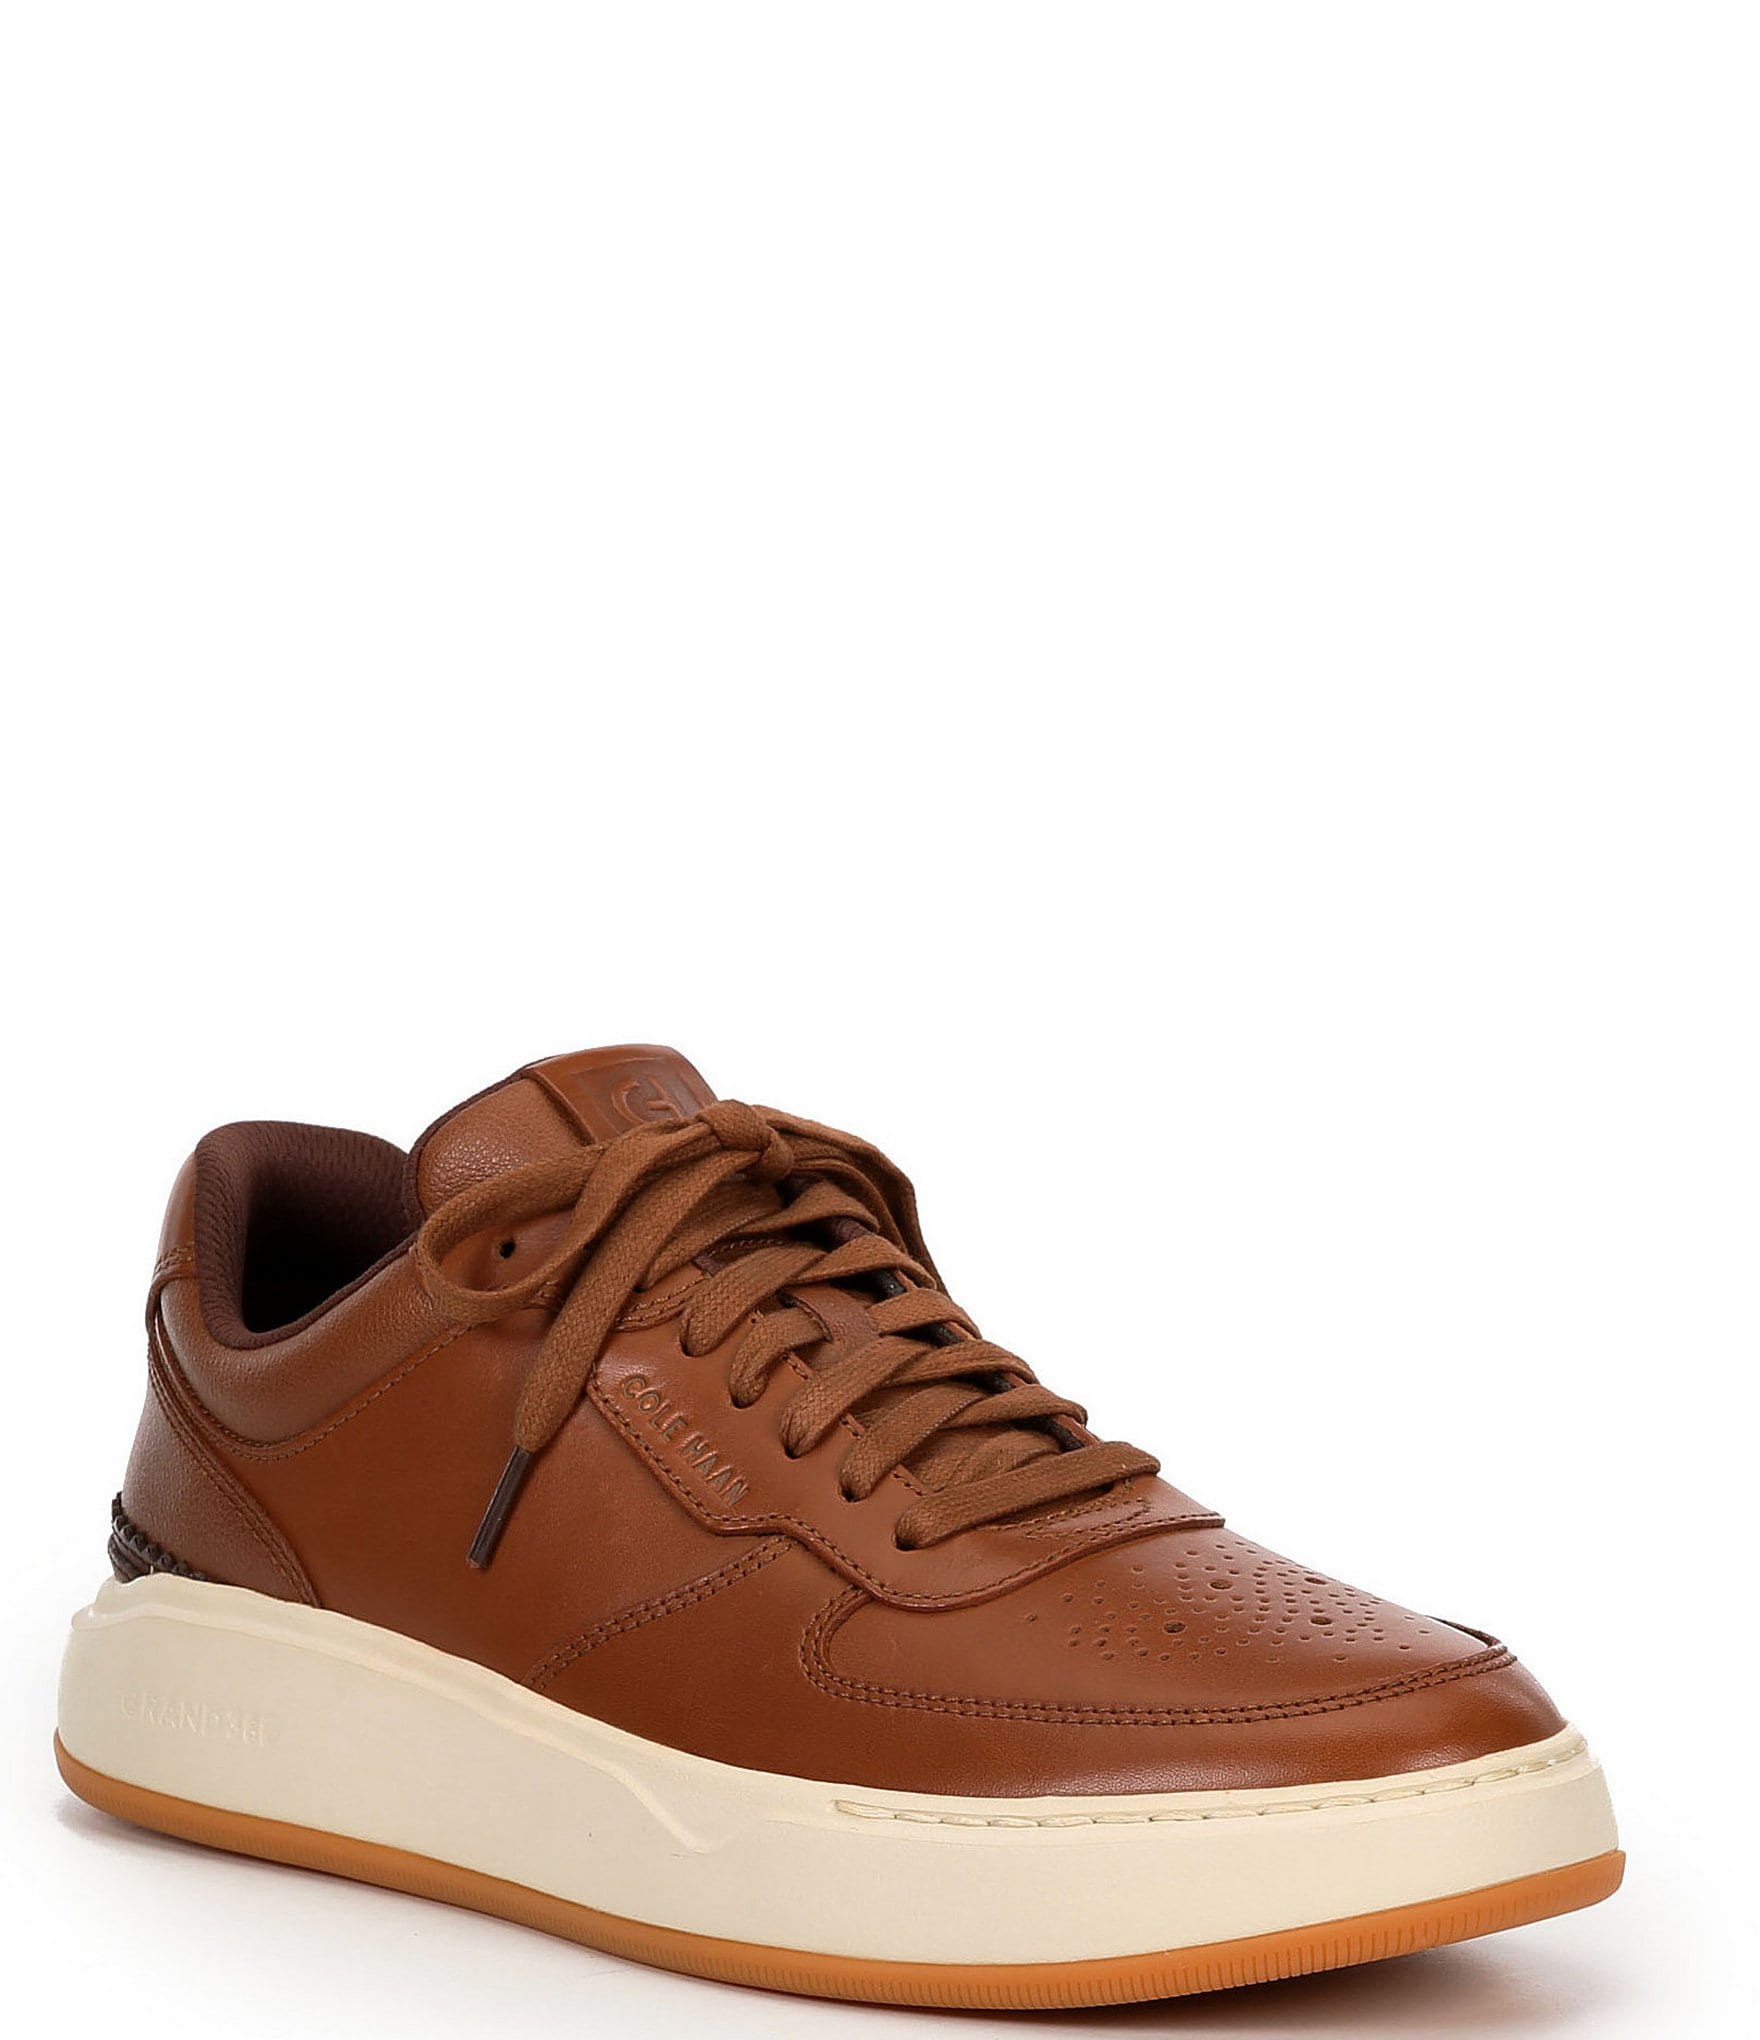 Men's Cole Haan Grand Crosscourt II Leather Sneaker - White - Size 11.5